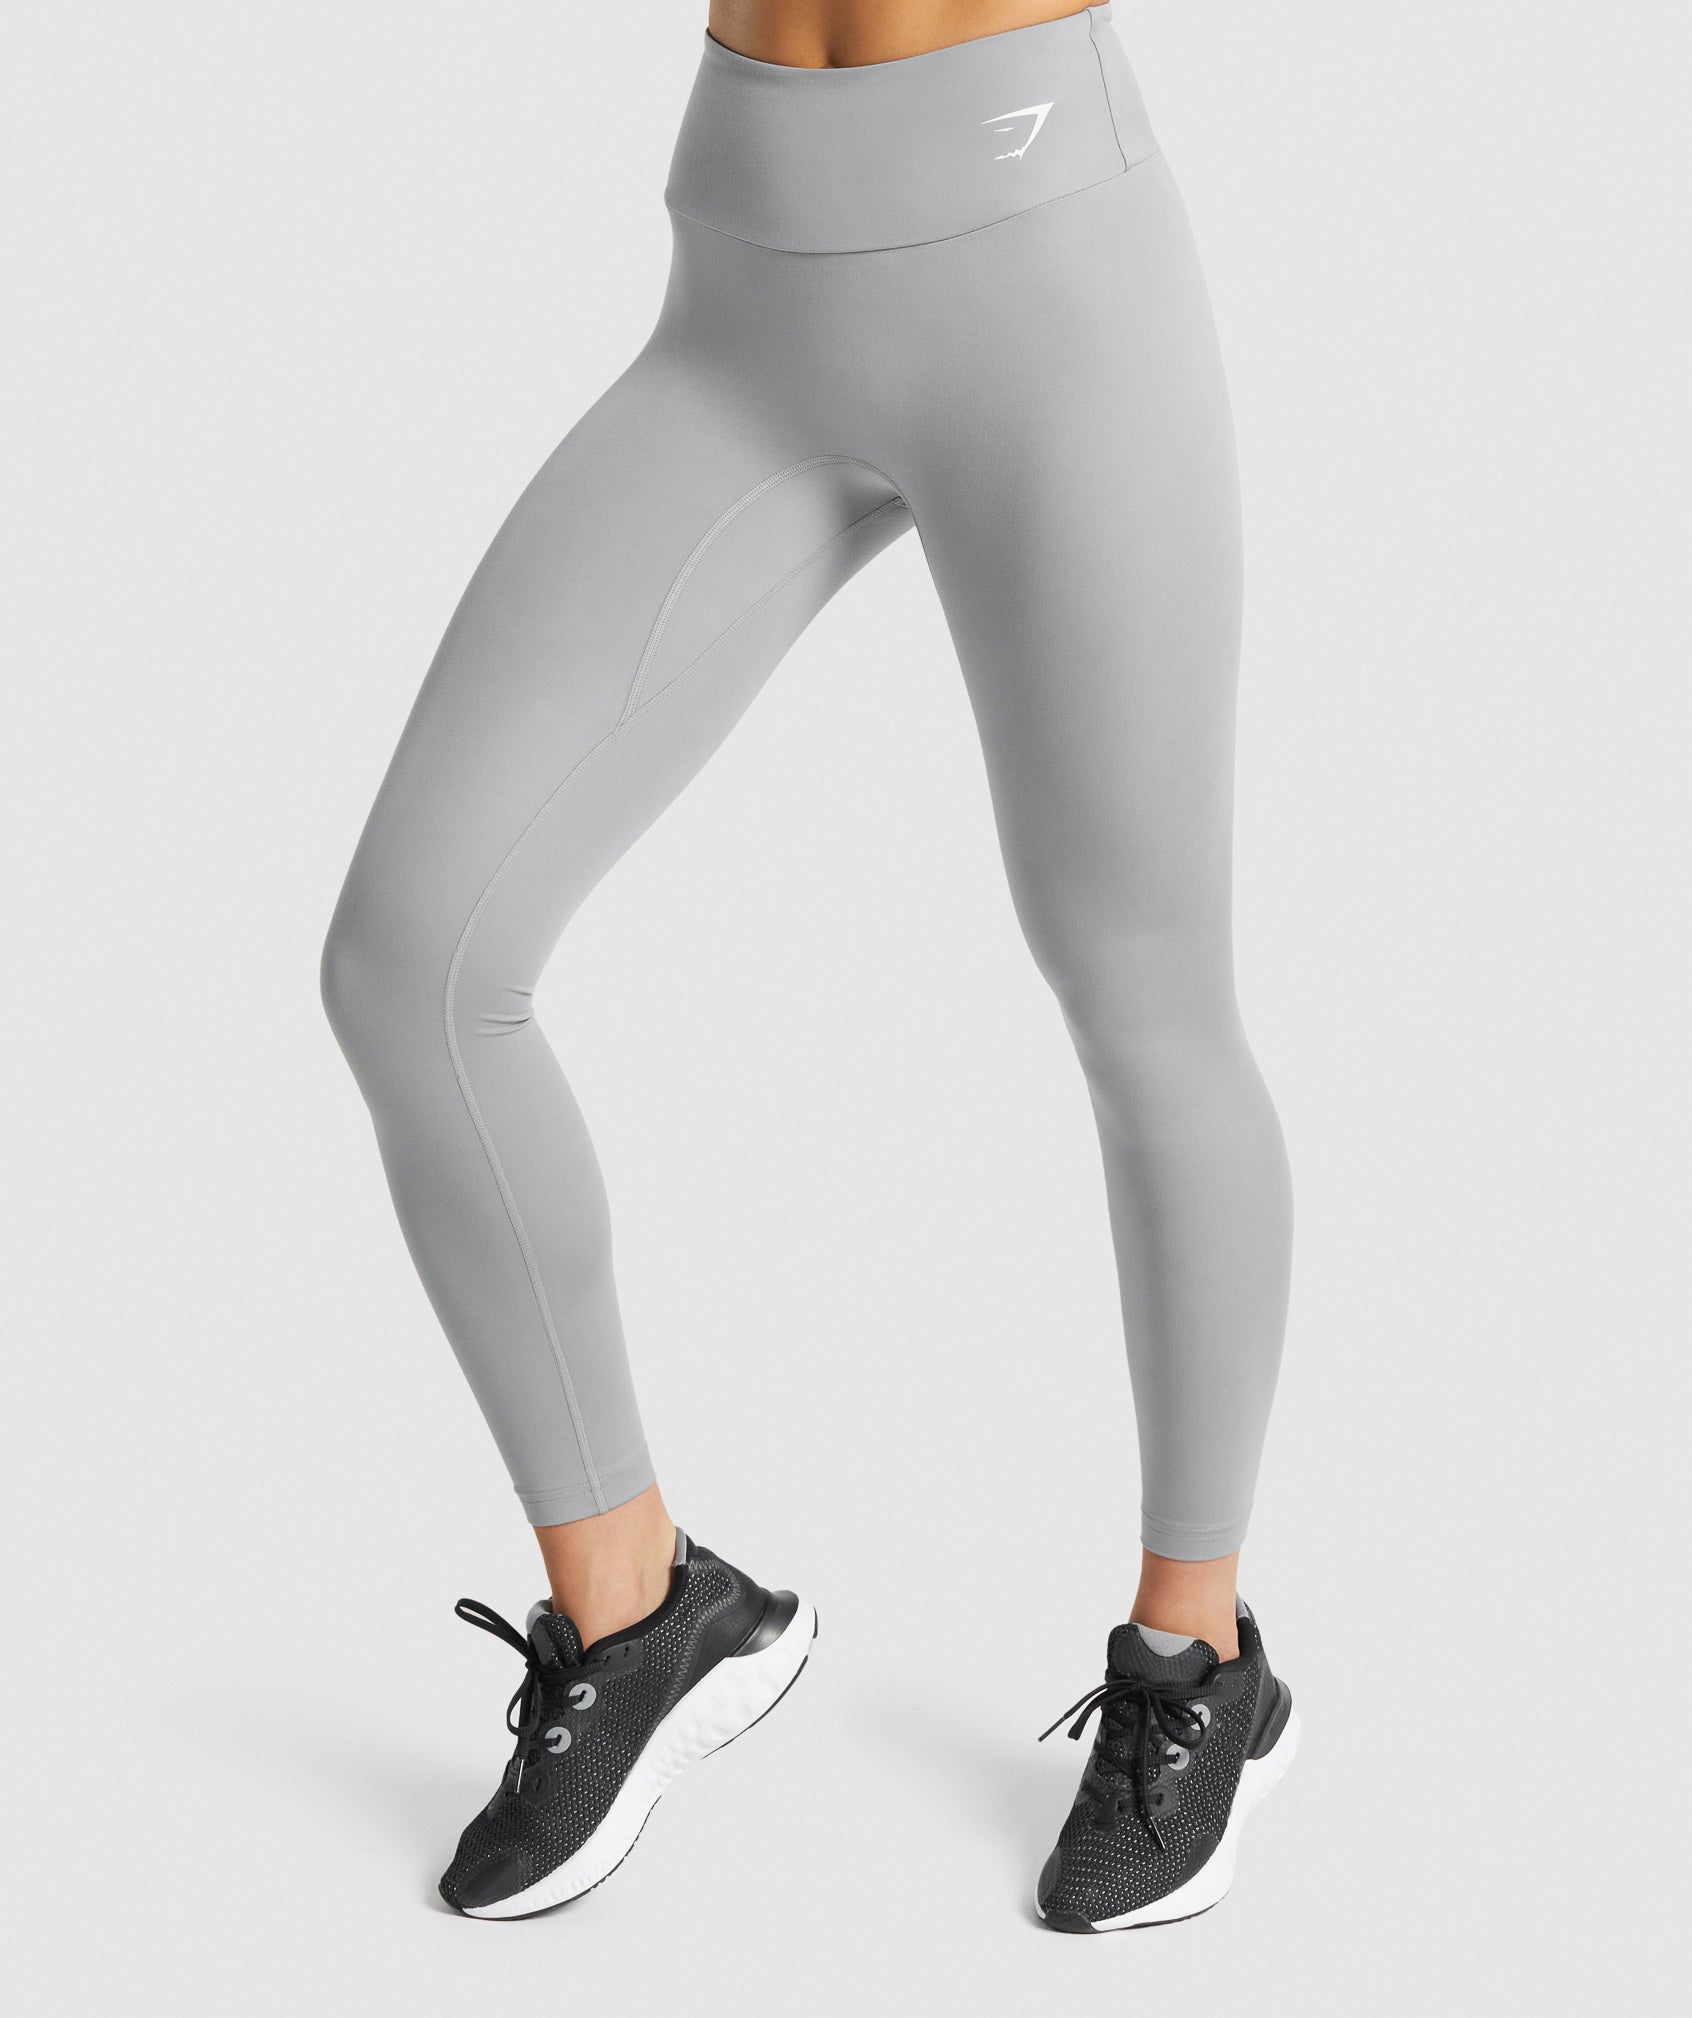 Gymshark women's Aspire Leggings heathered Grey W/ Pockets tights Lg